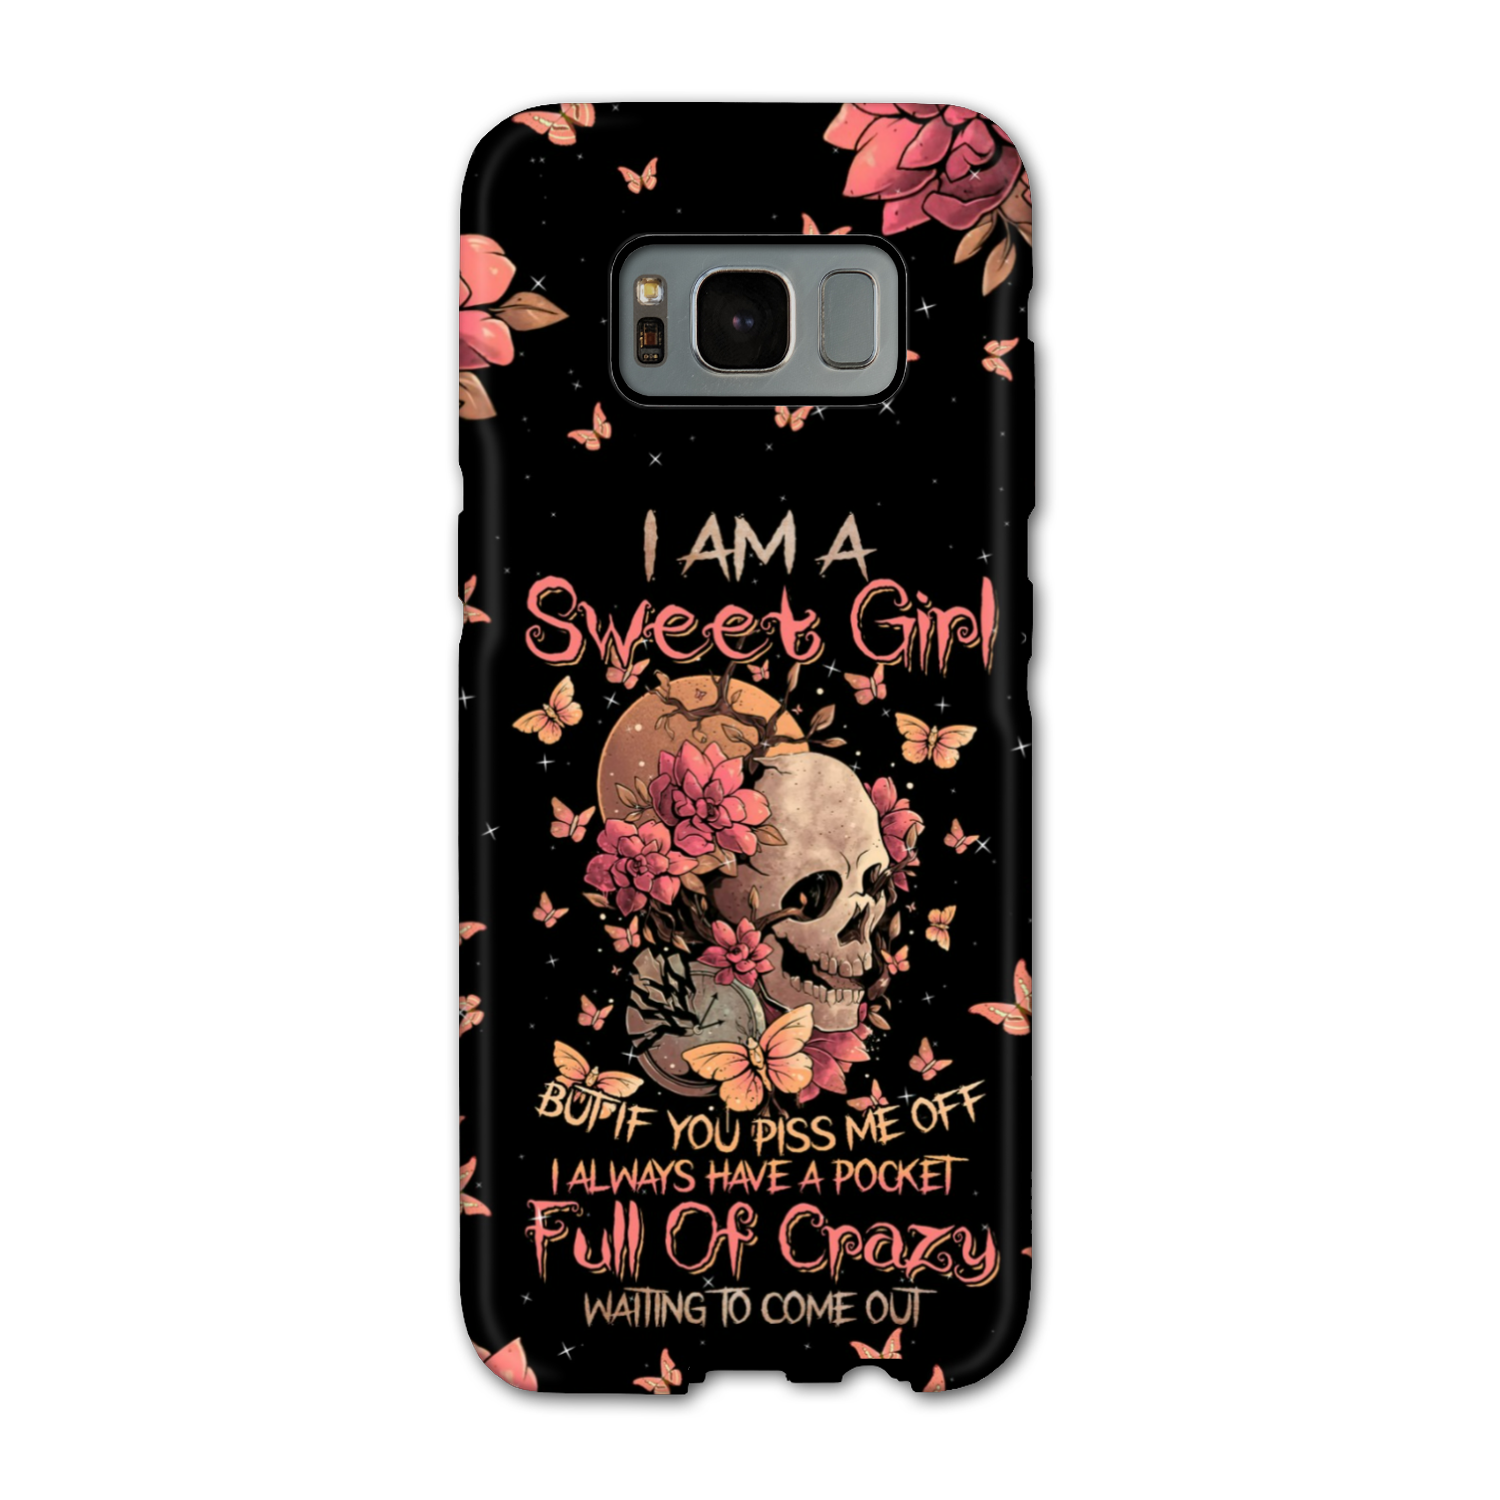 I AM A SWEET GIRL FLOWER SKULL PHONE CASE - TLNZ3101235